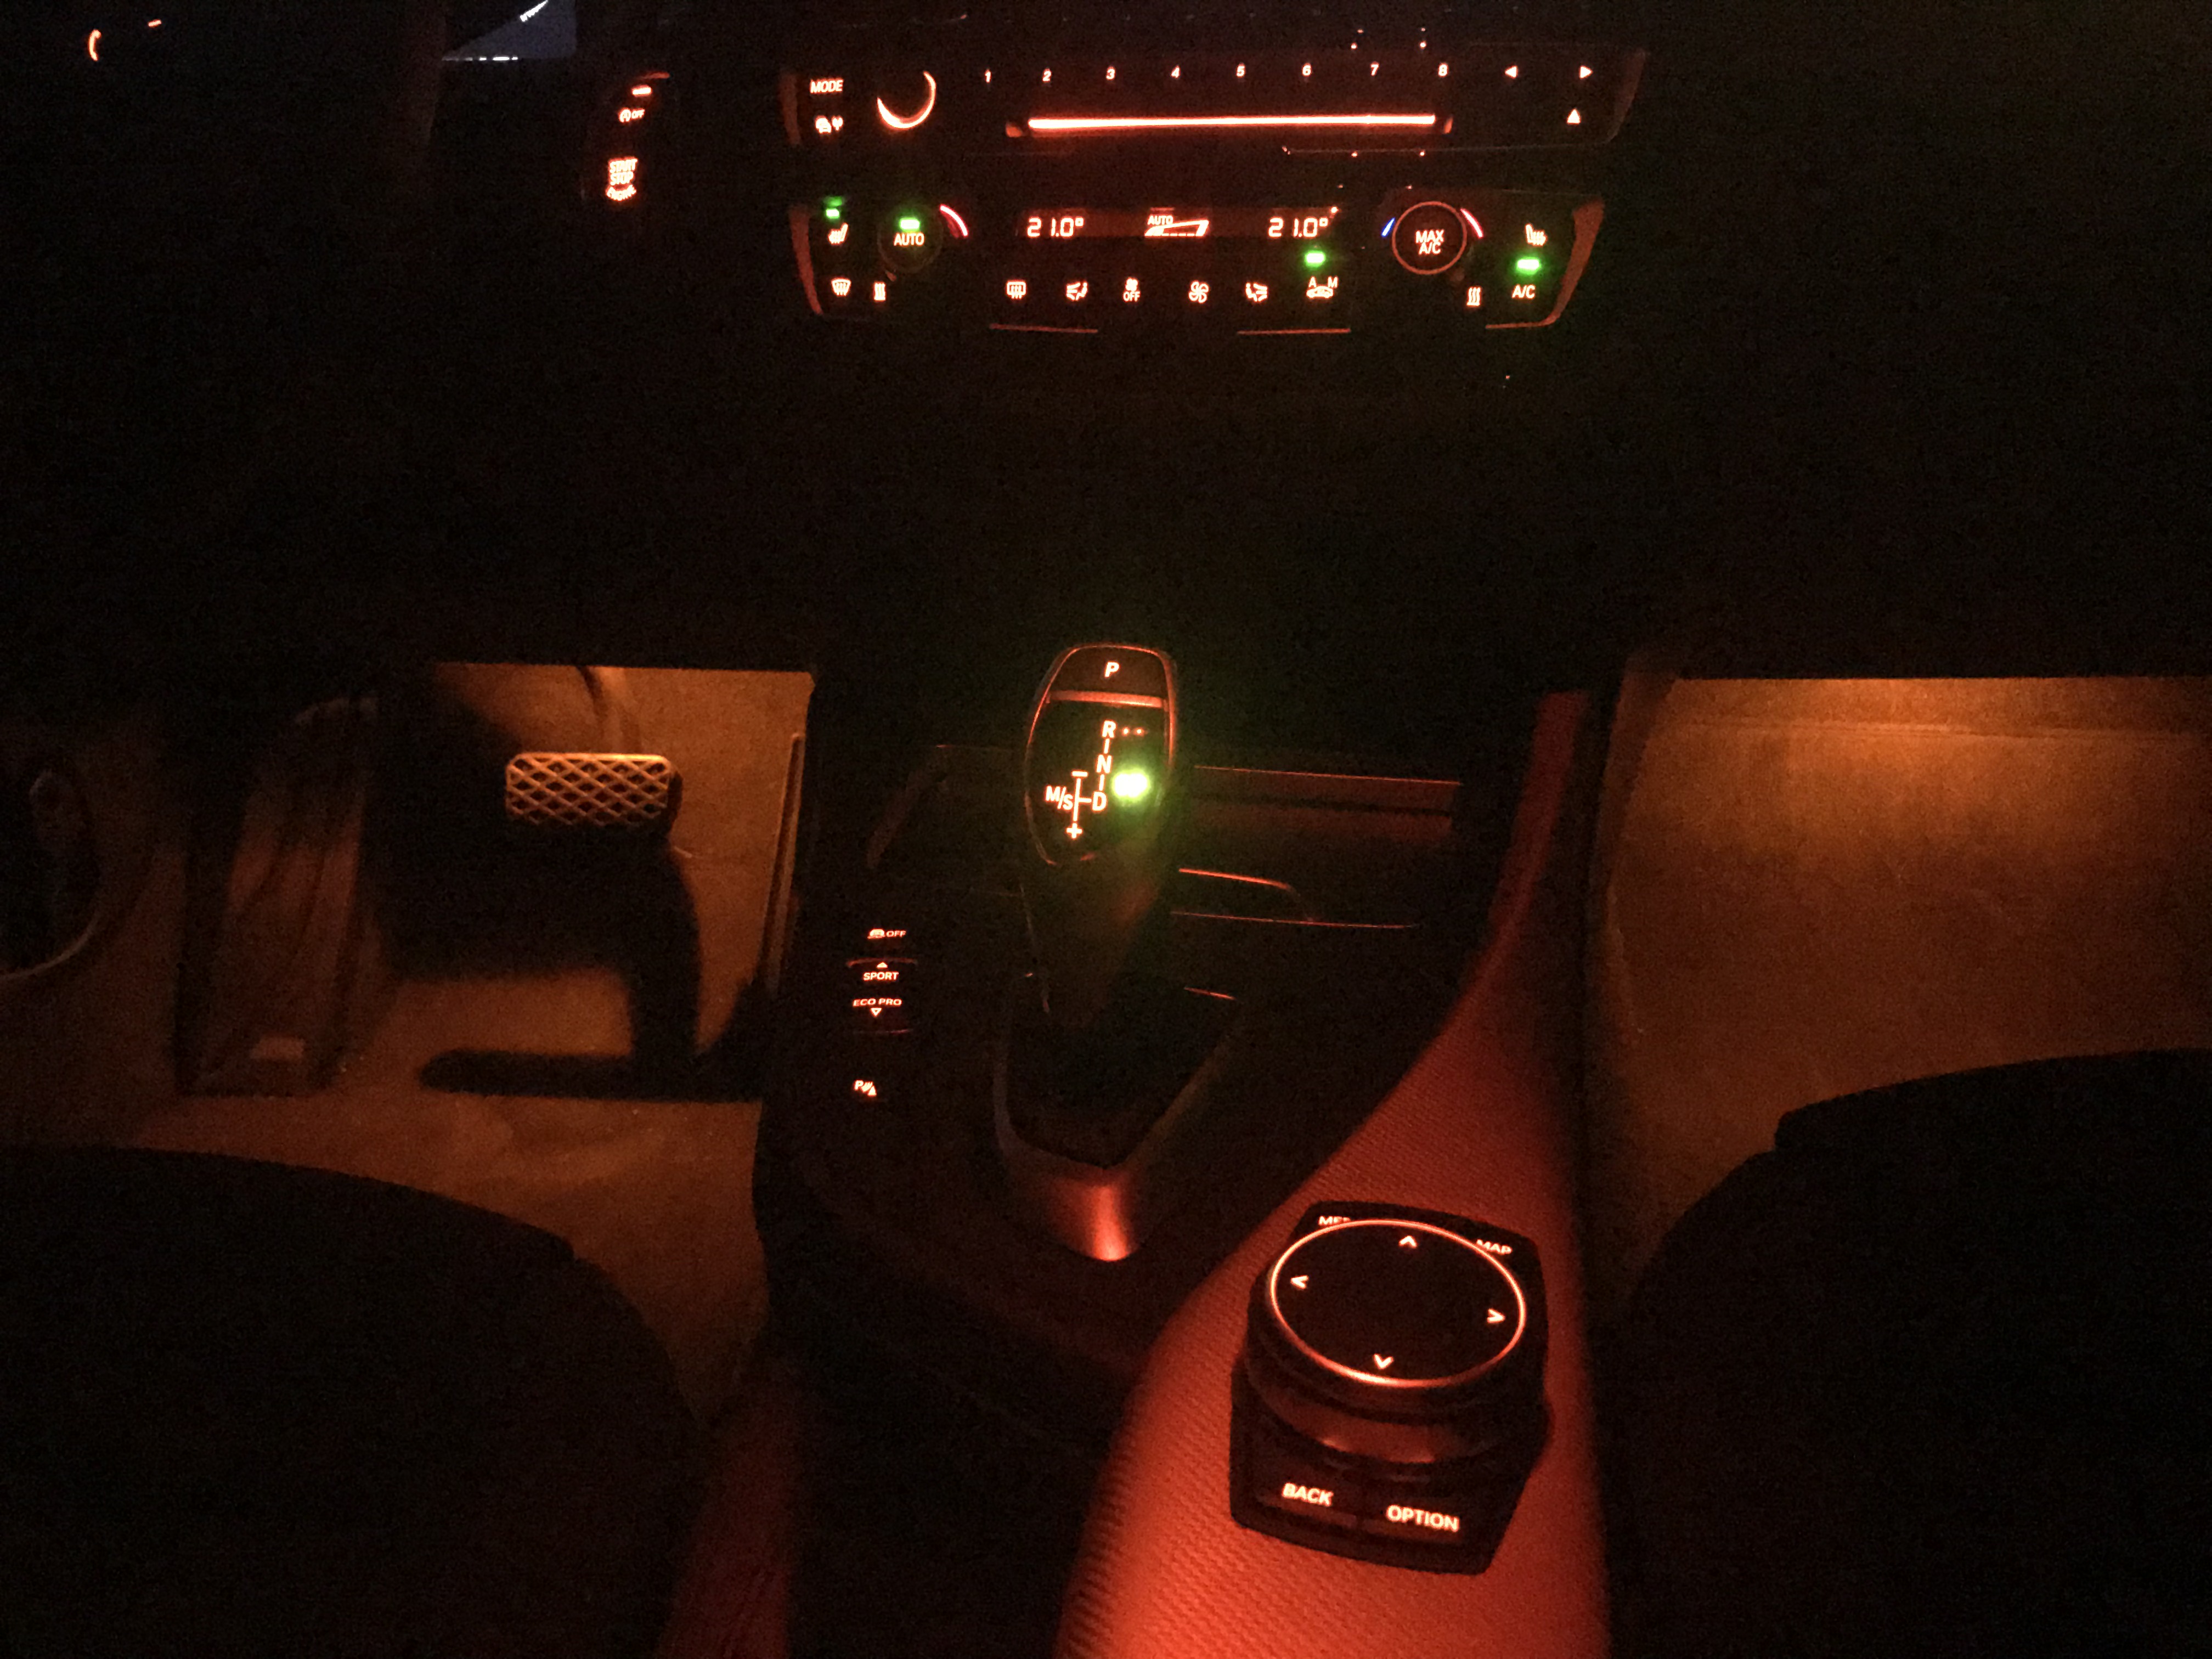 2x5630/2x5050 (weiß/orange-rot-blau-lila) SMD LED Modulplatine  Fussraumbeleuchtung für BMW, LED Fussraumbeleuchtung, LED Module, Auto  Innenraumlicht, LED Auto Innenraumbeleuchtung